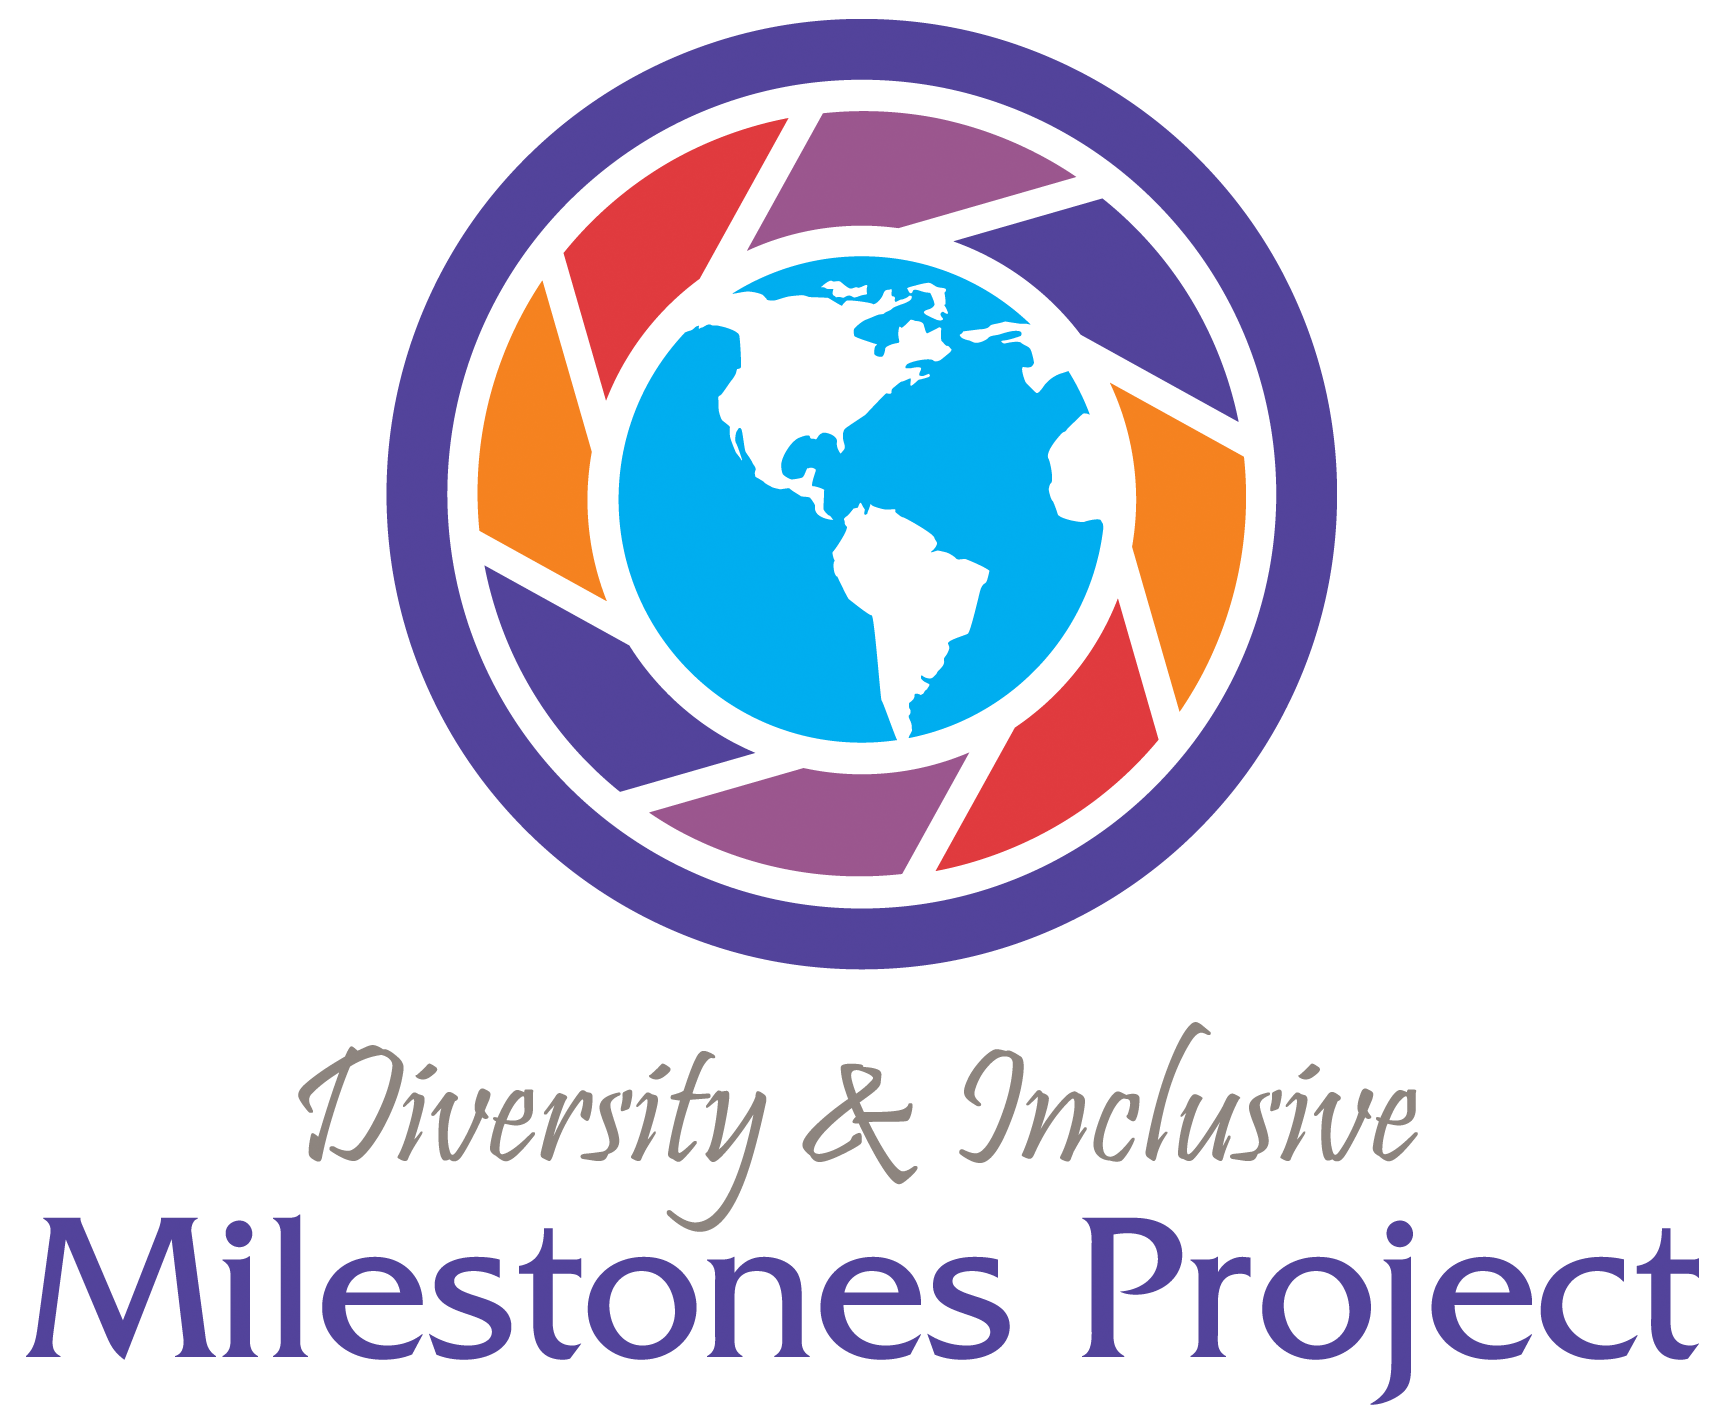 ACC Diversity and Inclusive Milestones Project logo